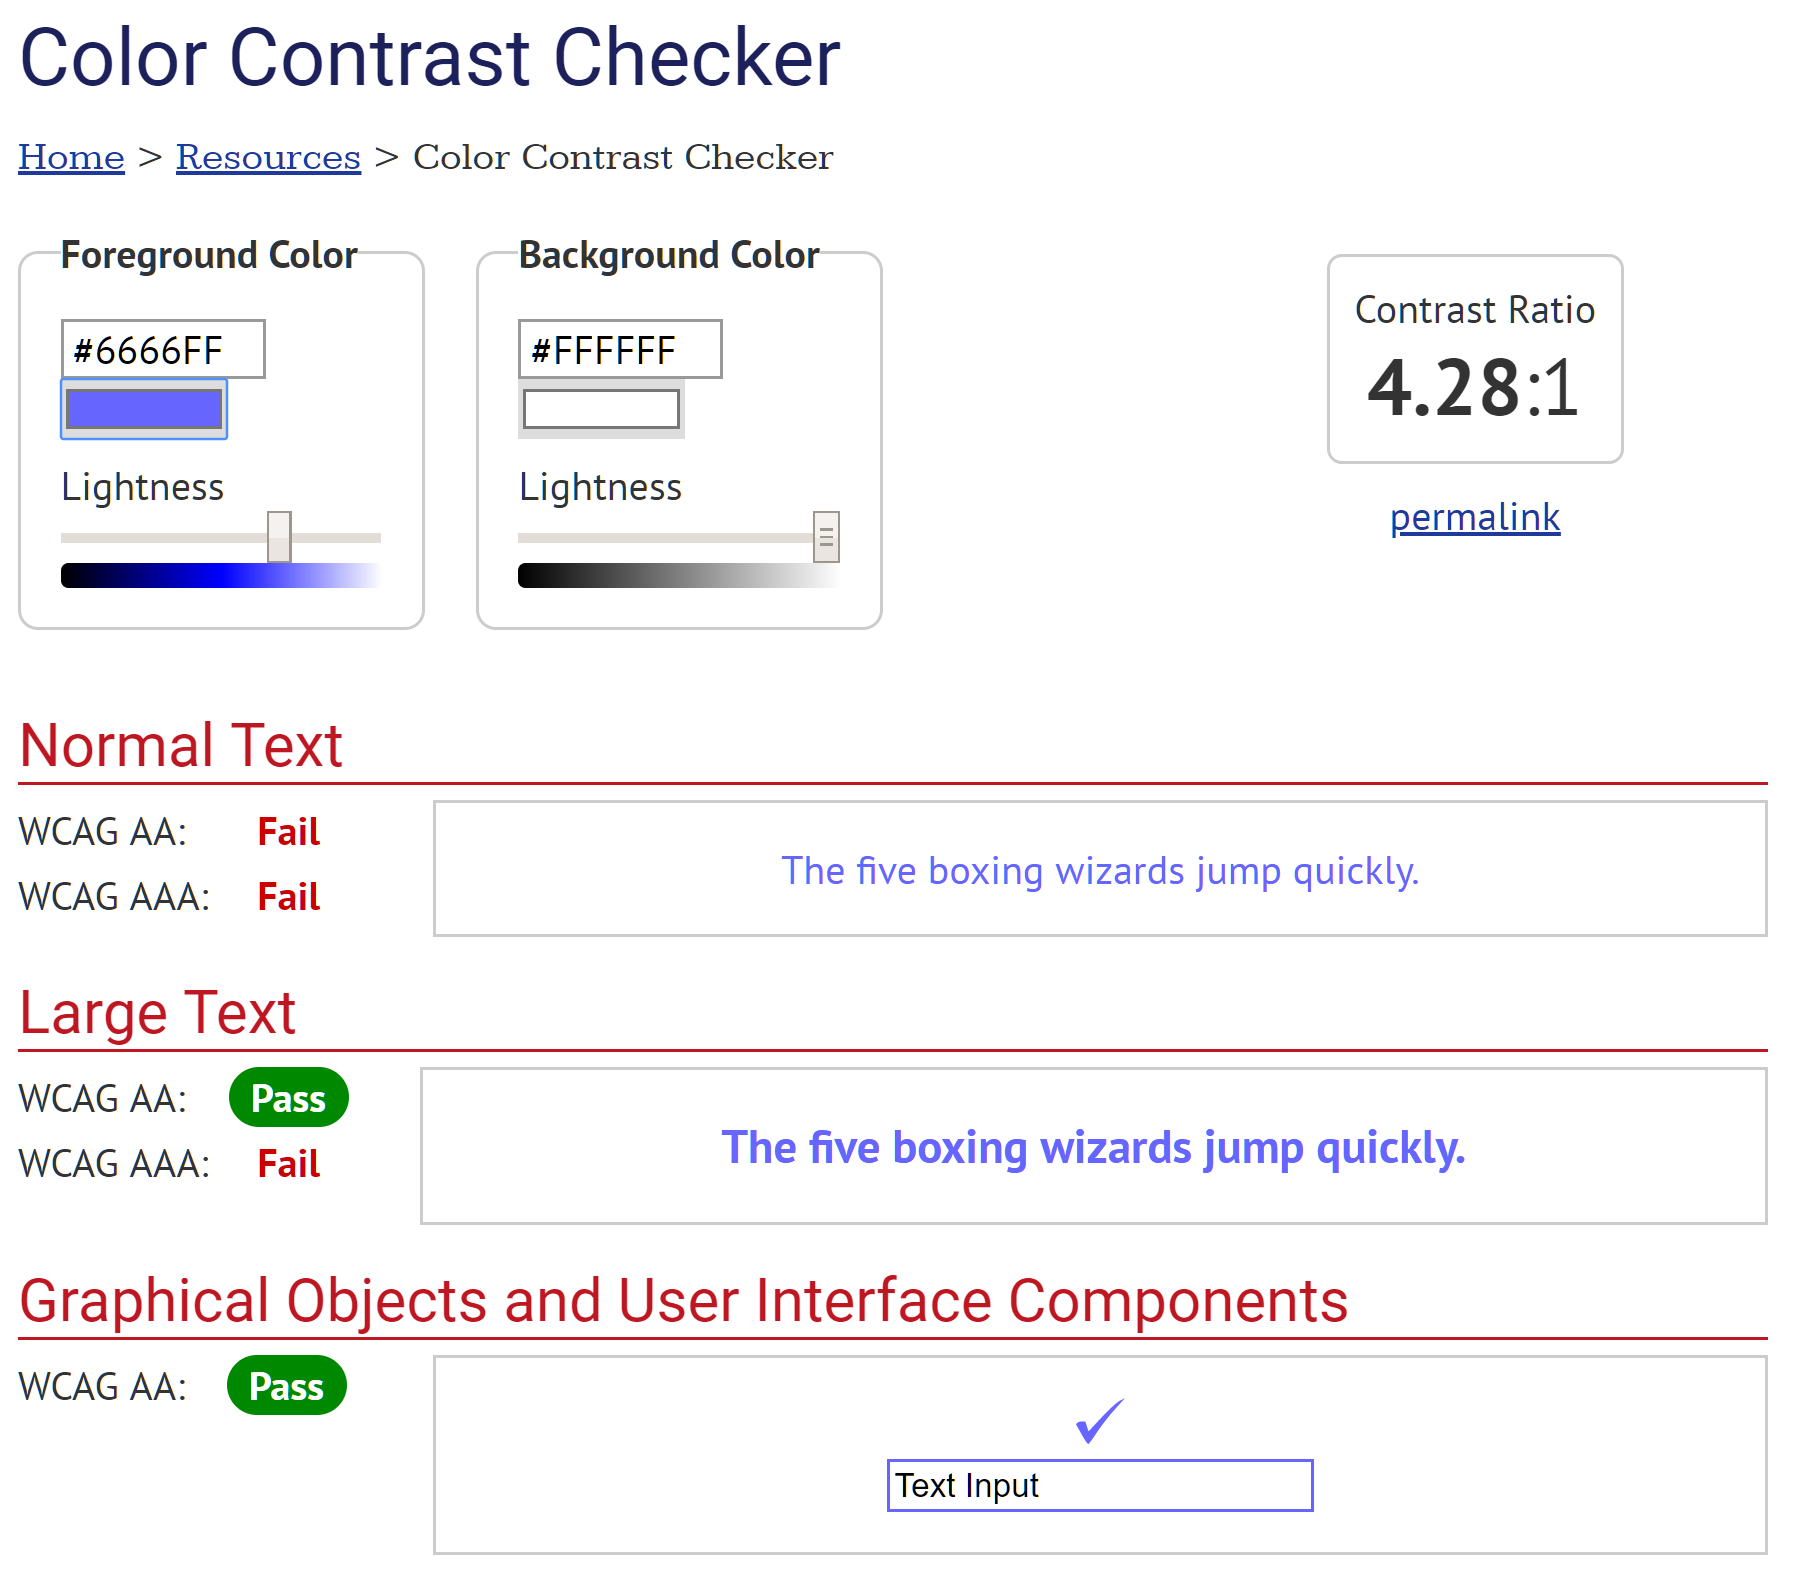 WebAim's Colour Contrast Checker interface.